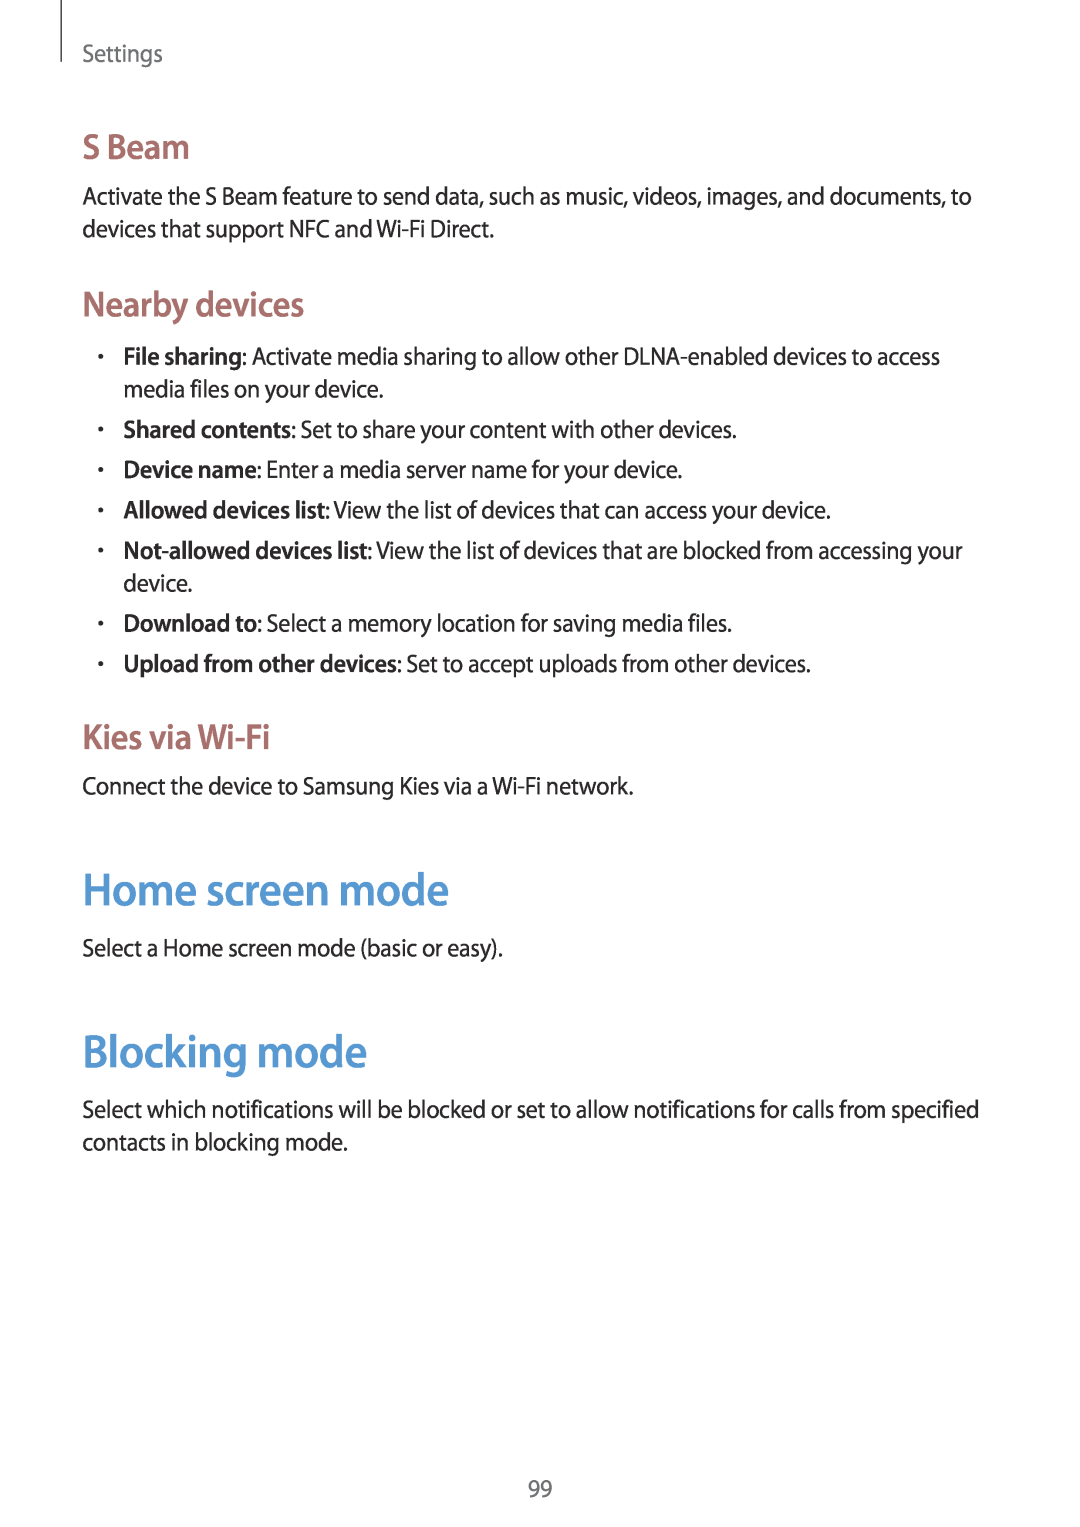 Samsung GT-I8190RWNBTU, GT-I8190RWNDTM Home screen mode, Blocking mode, S Beam, Nearby devices, Kies via Wi-Fi, Settings 